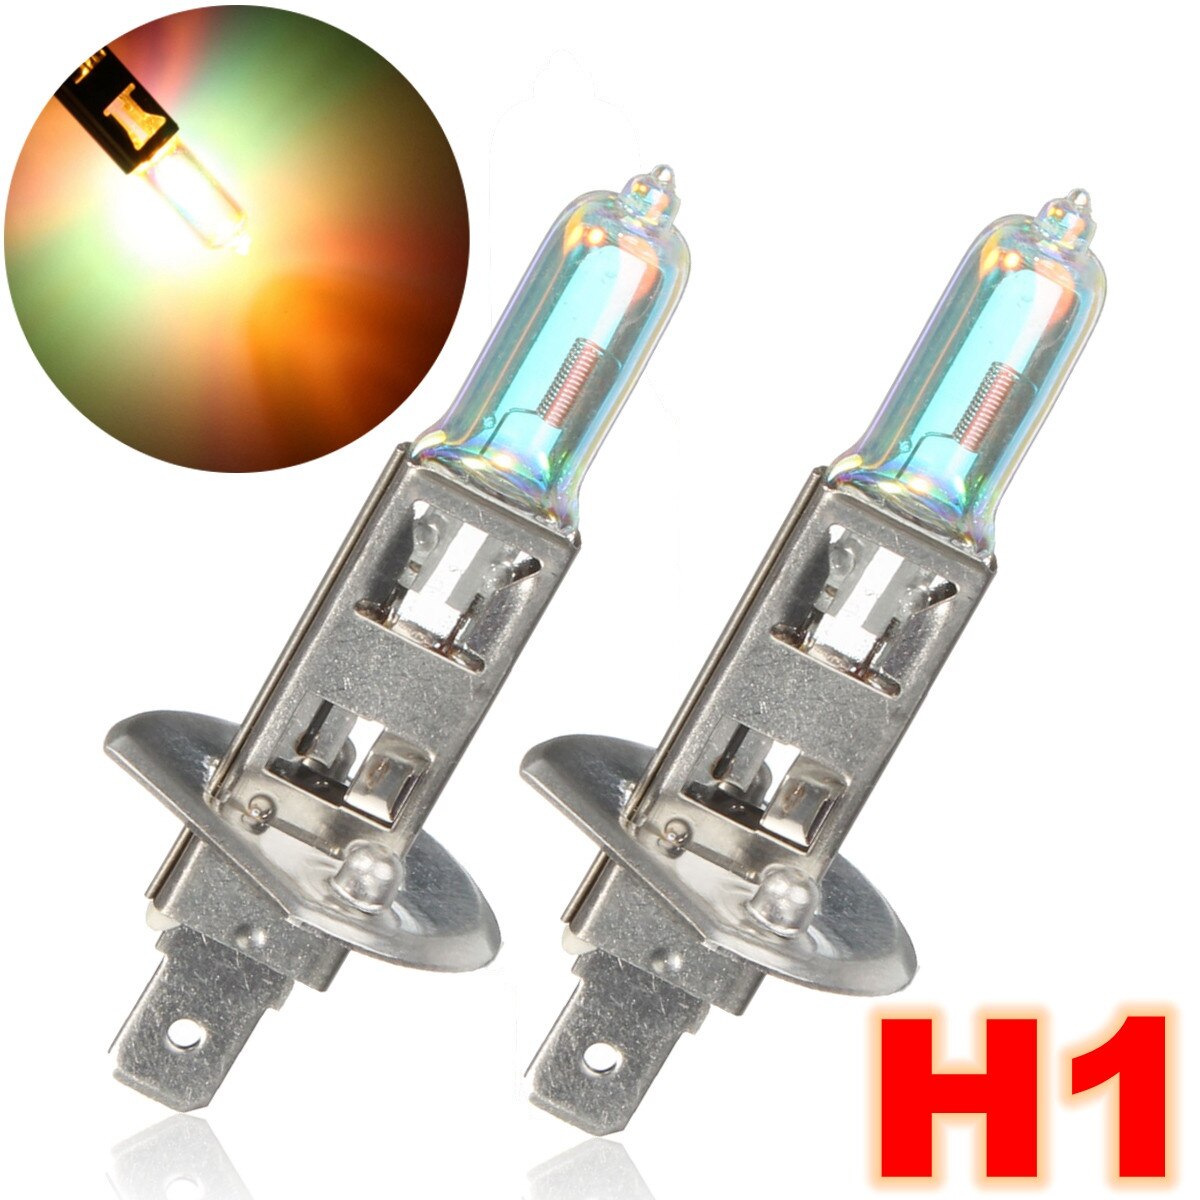 2 Stuks Dc 12V H1 100W Halogeenlamp Auto Auto Koplamp Licht Koplamp Lamp Regenboog-Multi Coloured